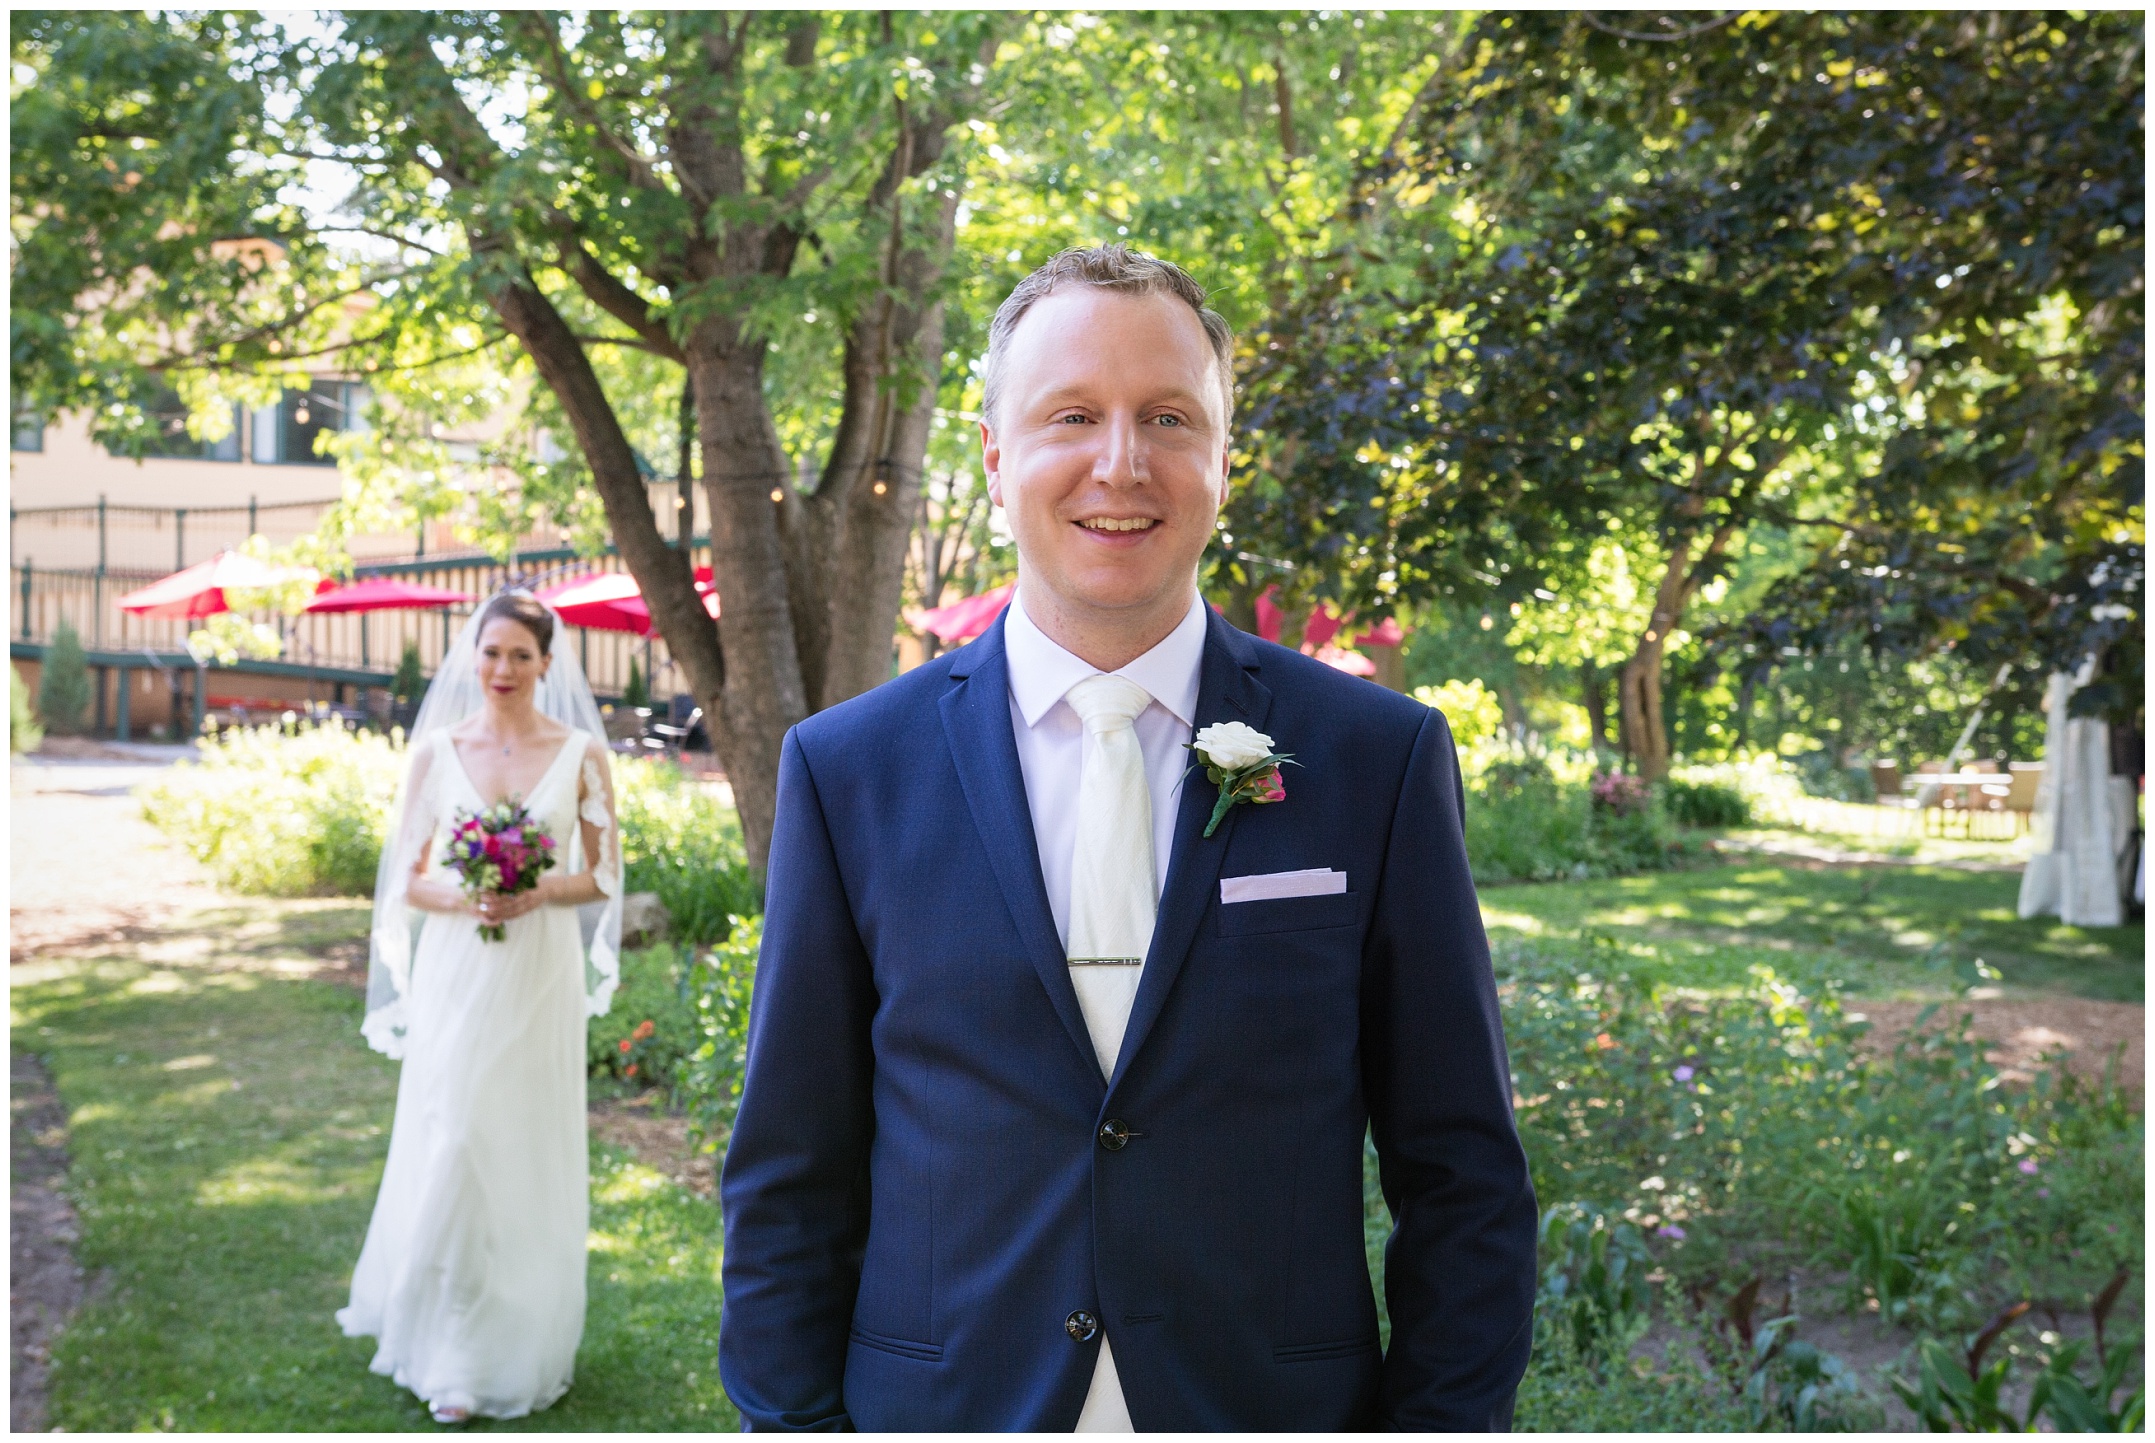 Ottawa wedding photography by Stacey Stewart